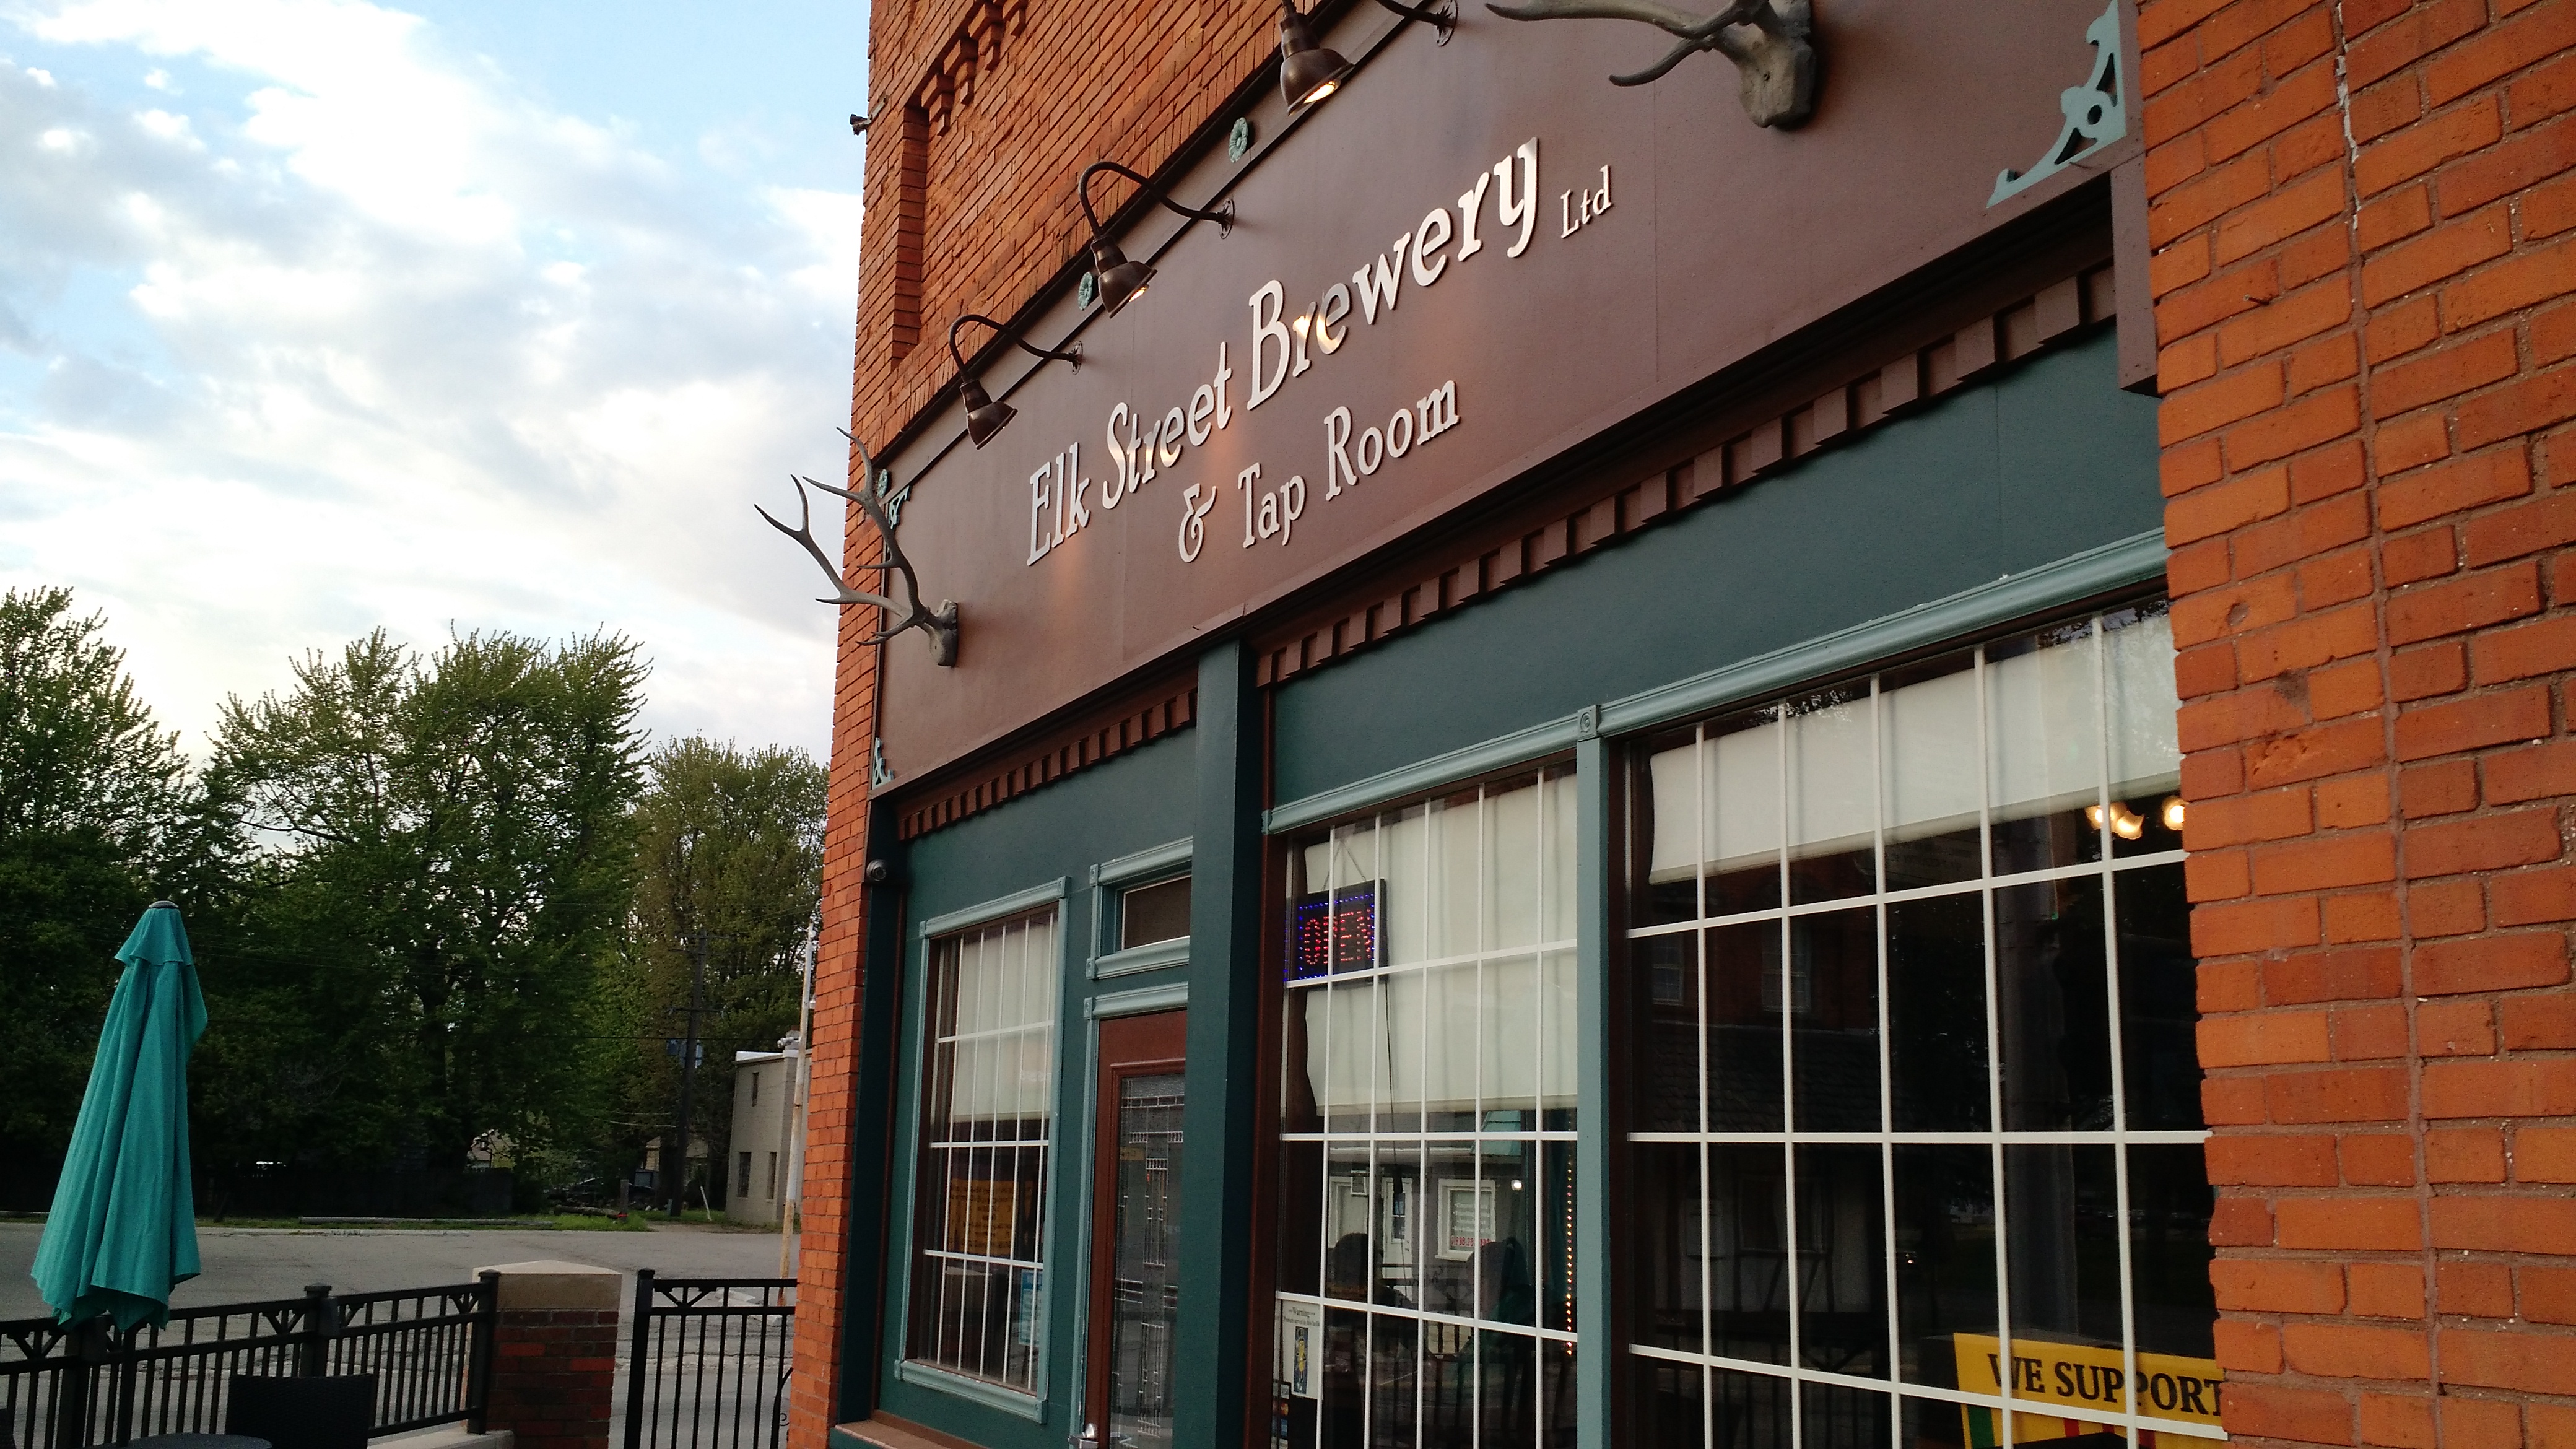 The Elk Street Brewery in Sandusky